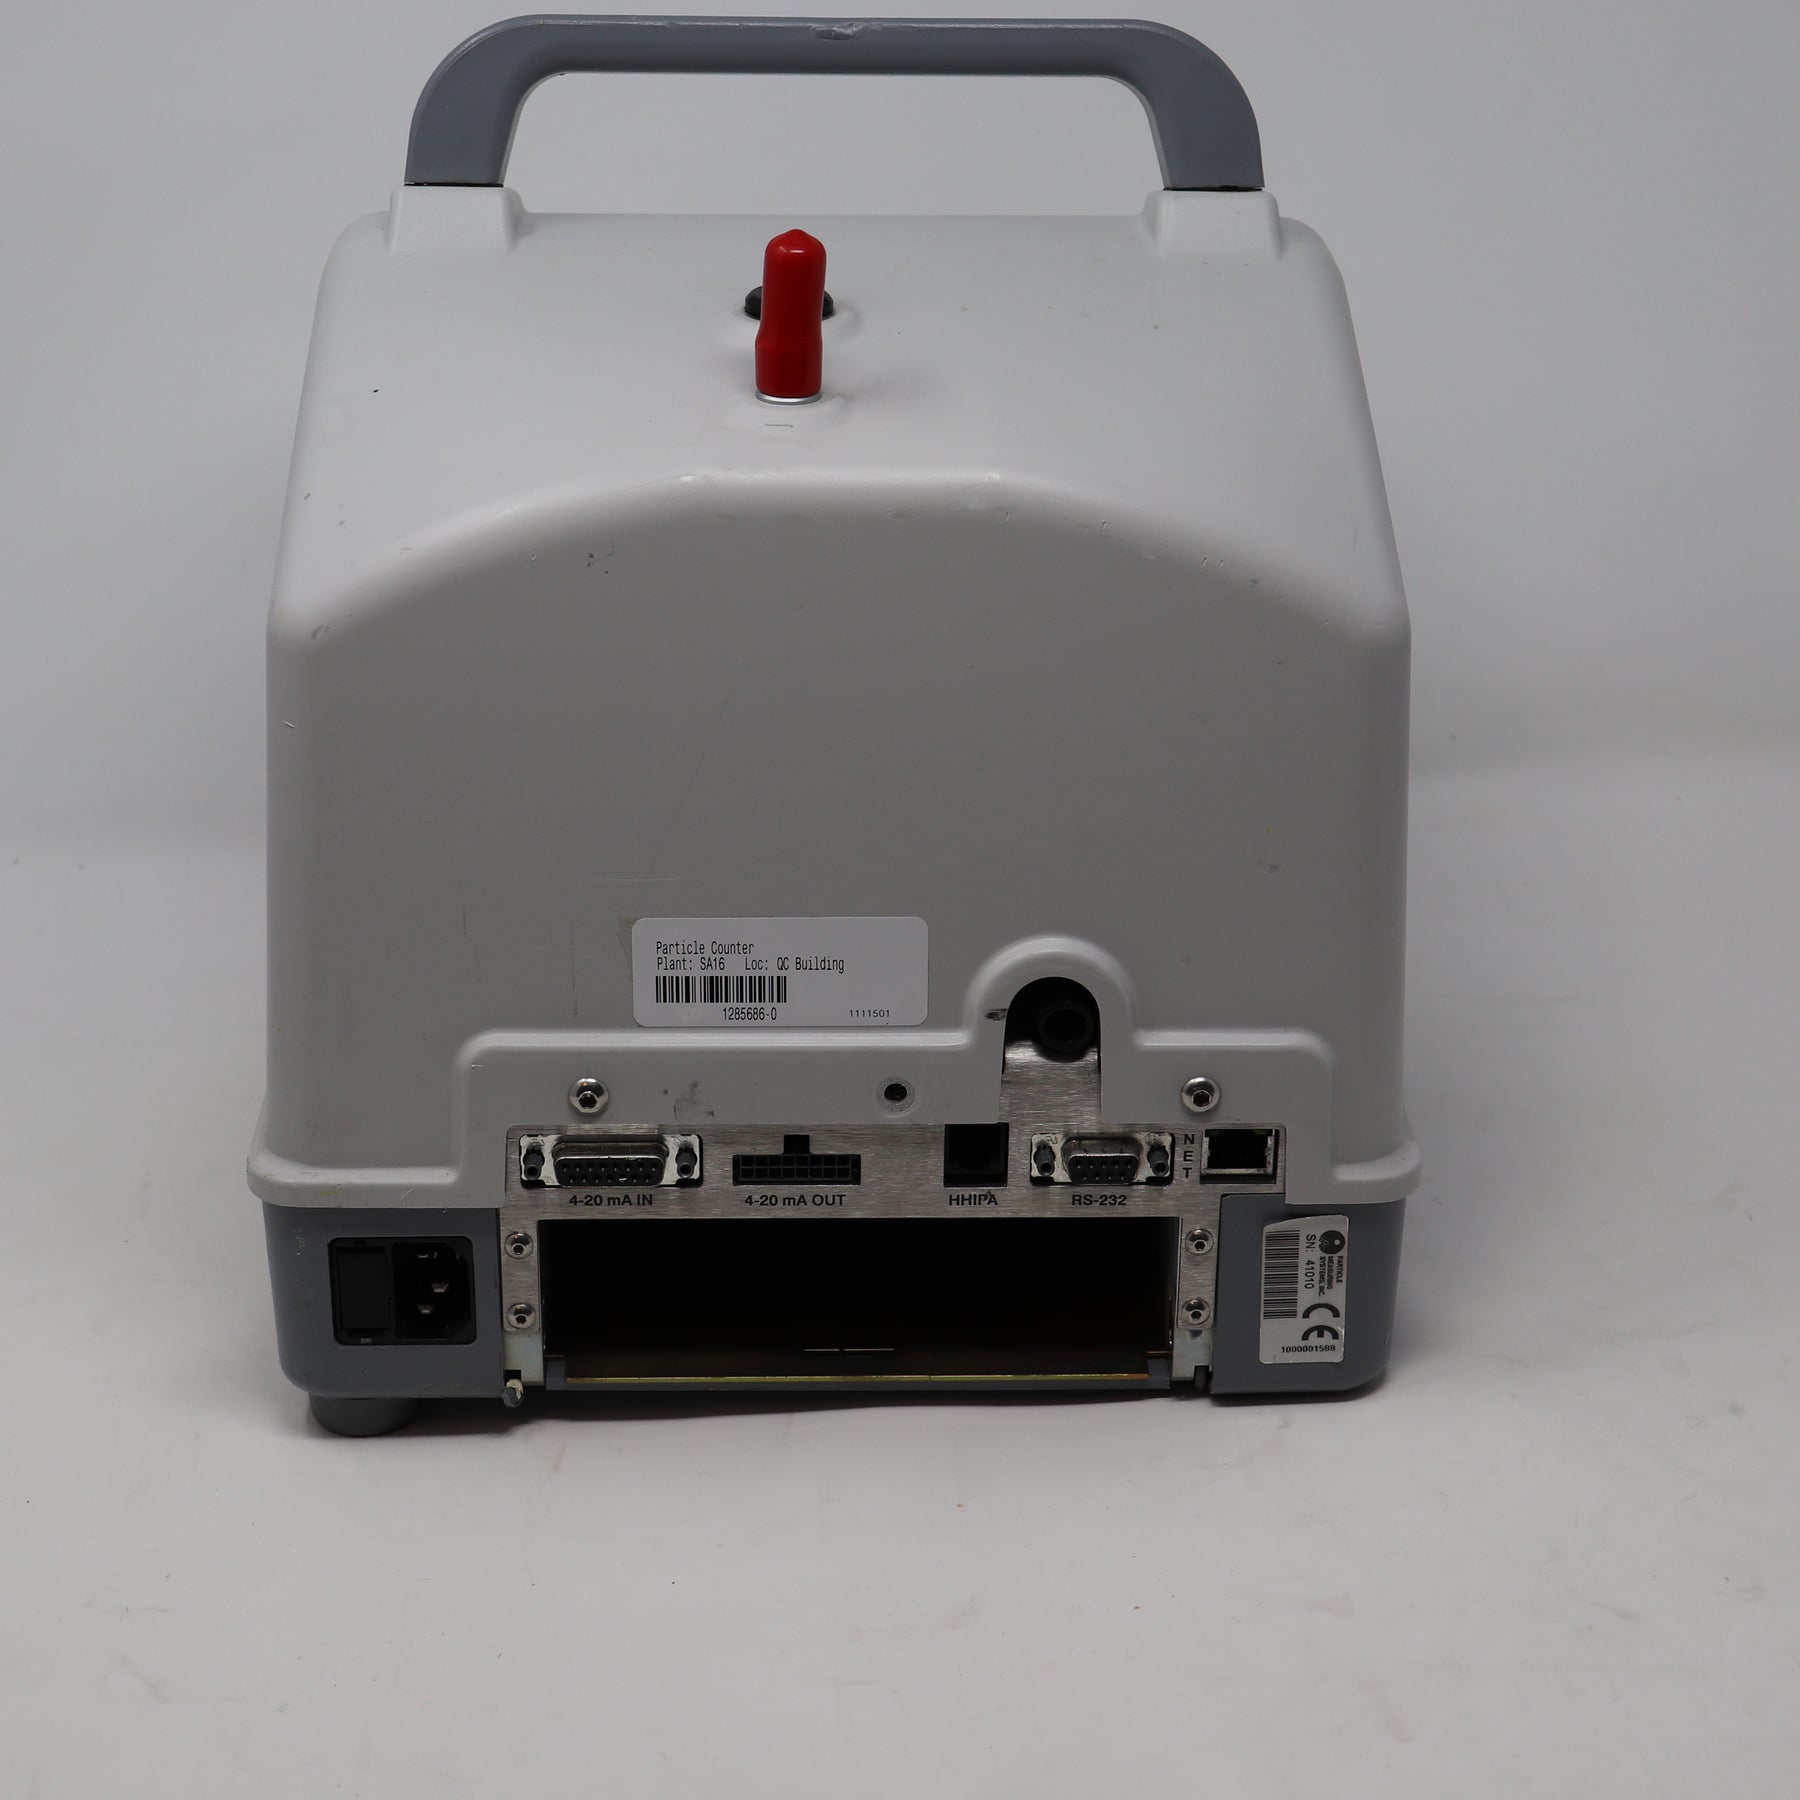 Lasair II 510a Air Quality Monitor Particle Counter